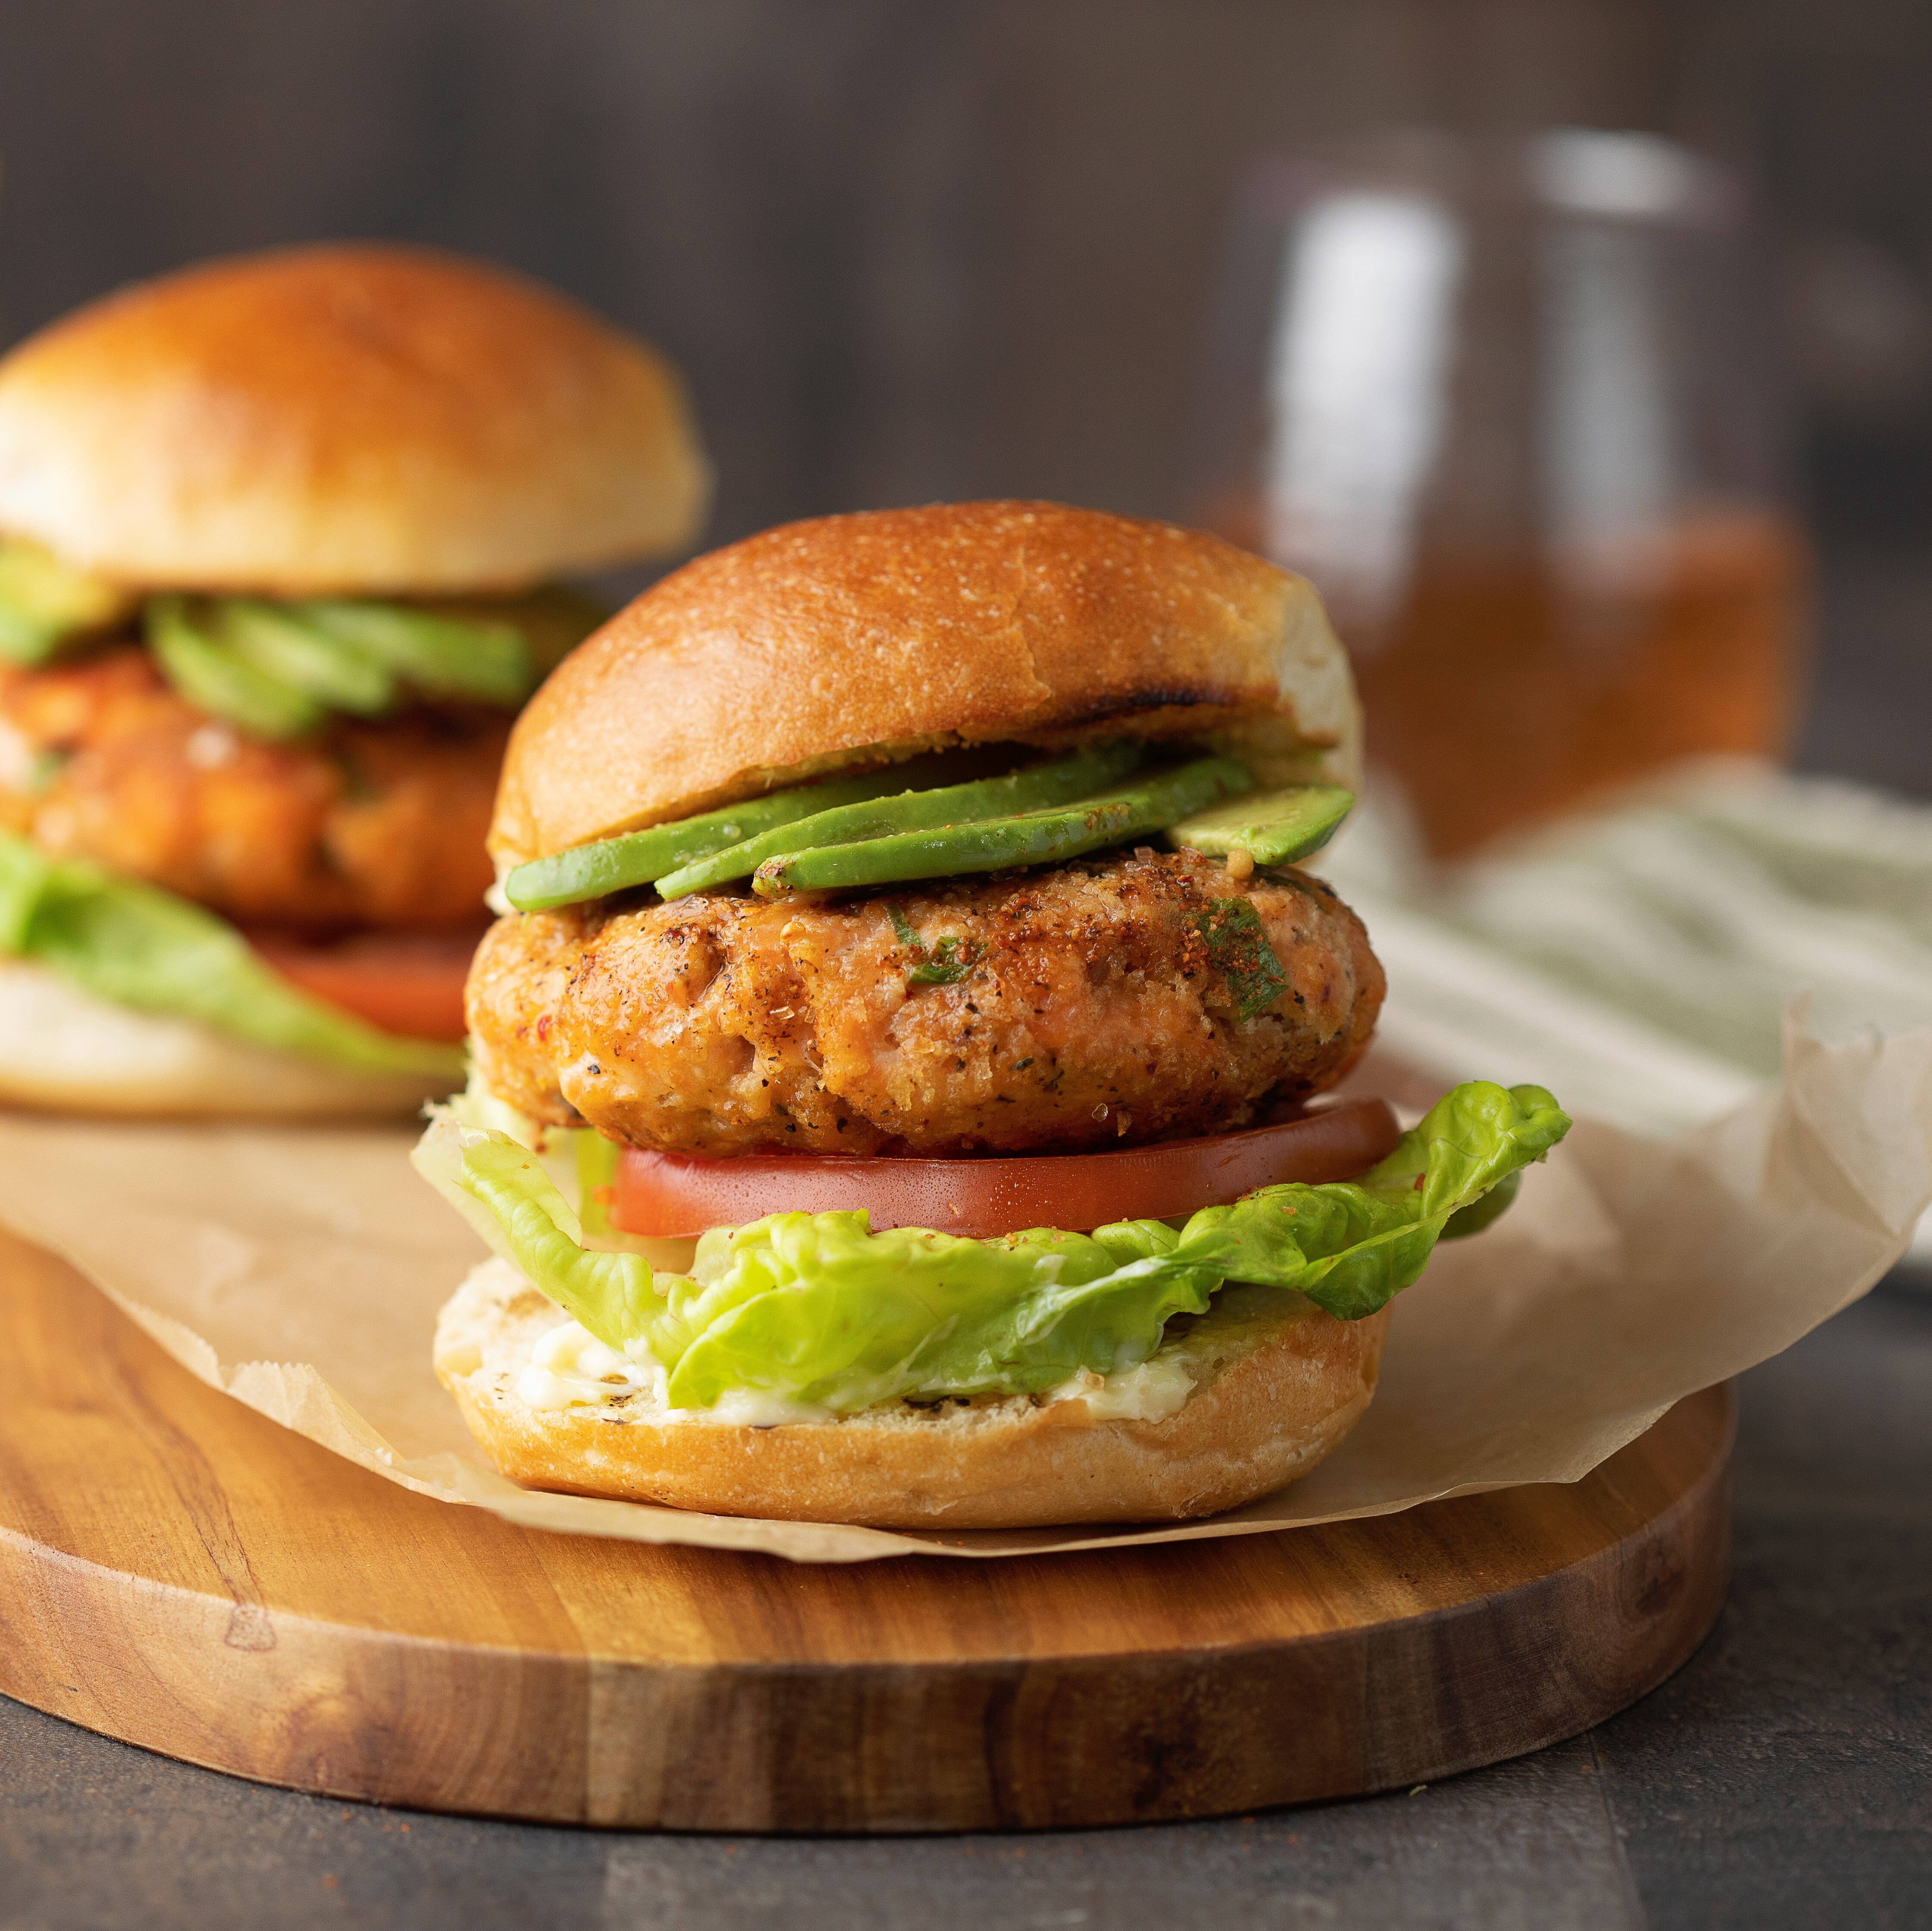 Weber Flavor Bomb Burger Seasoning Review @GrillwithWeber 